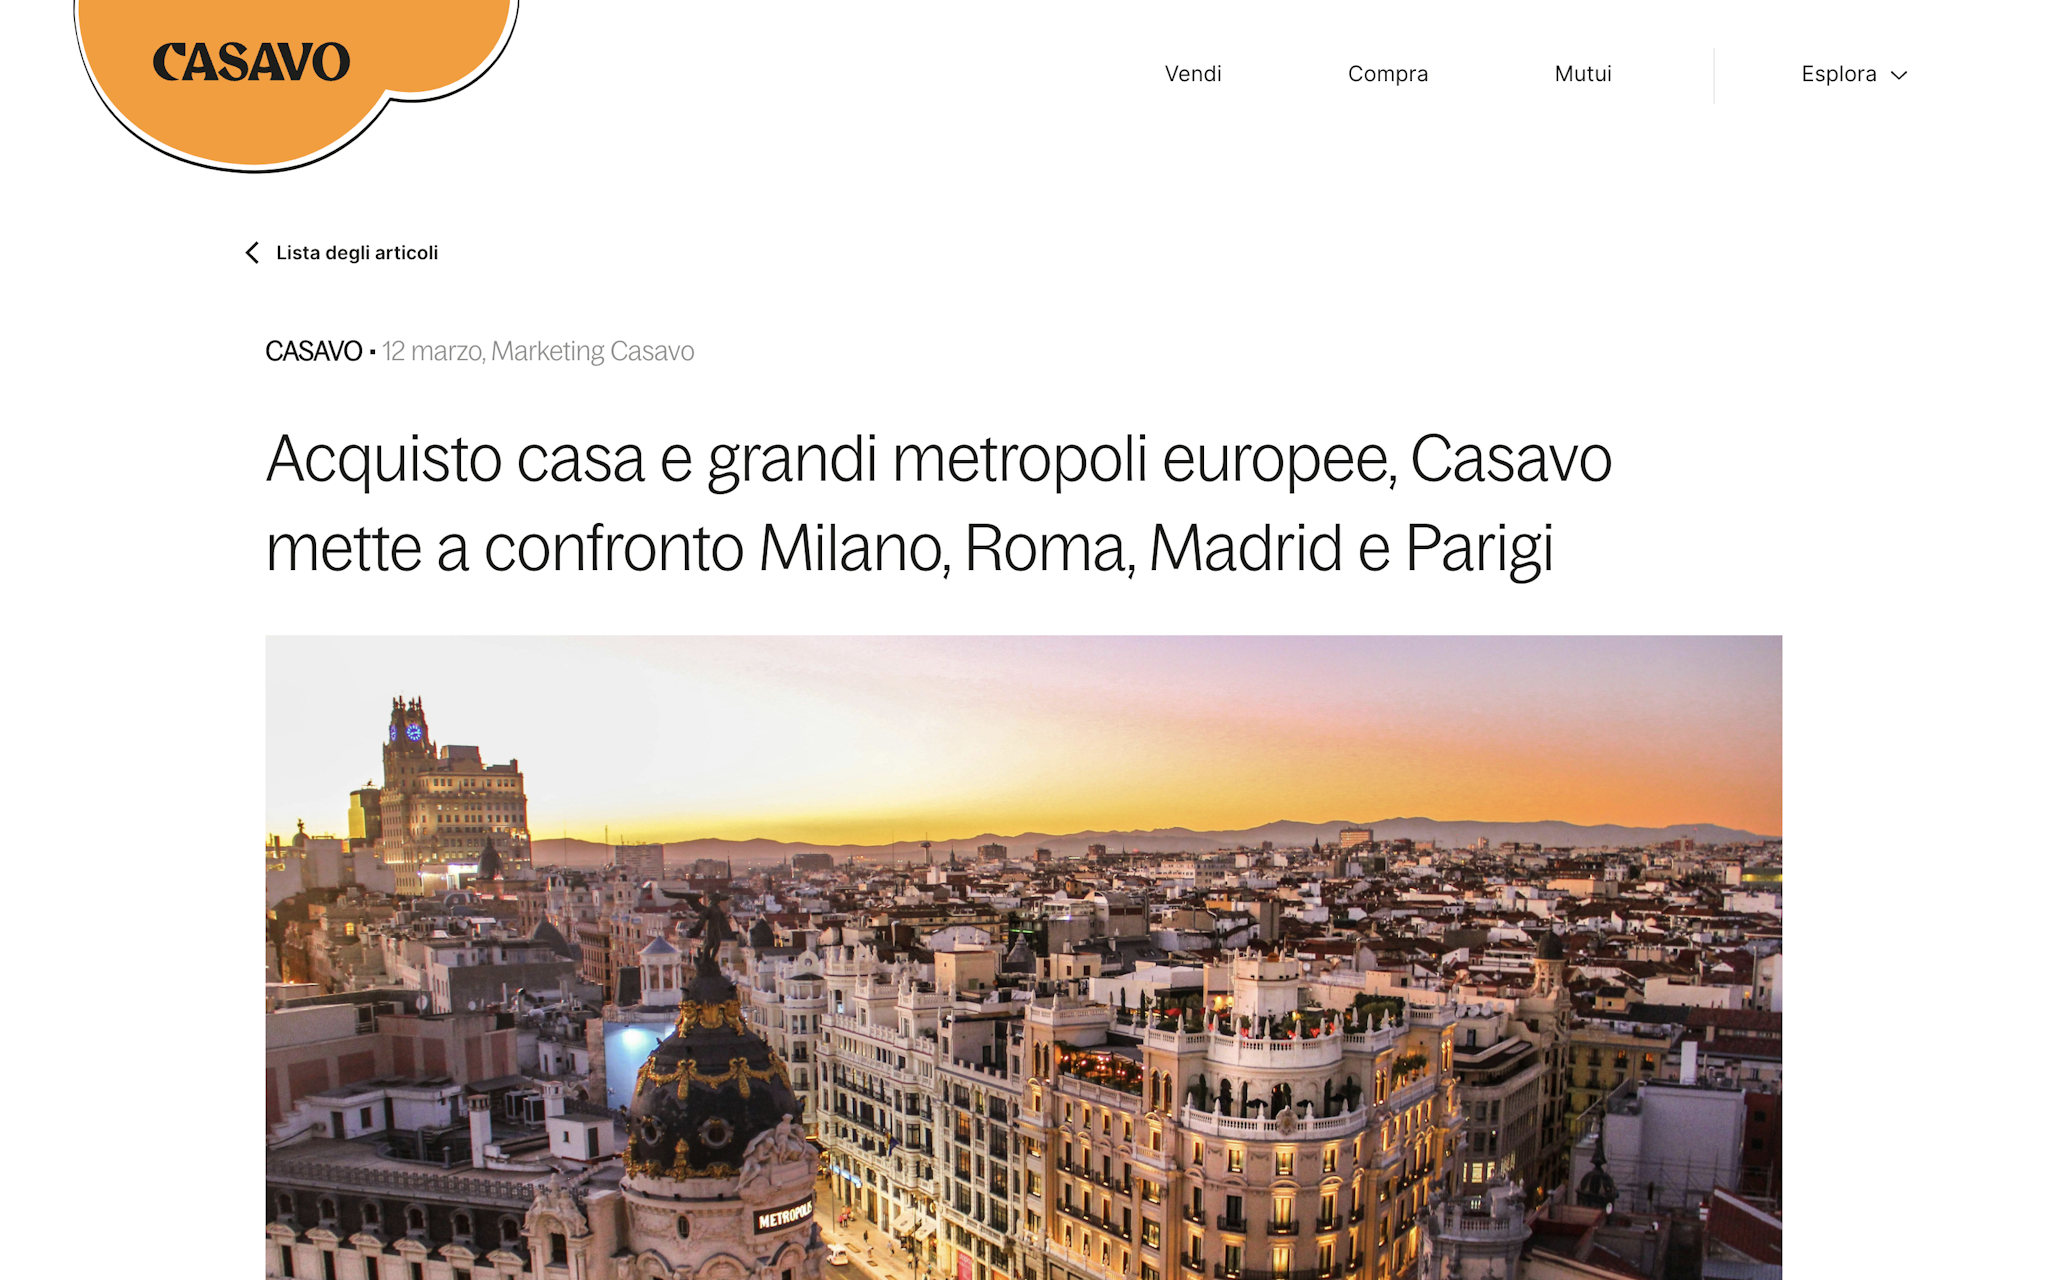 Casavo website made with React Bricks